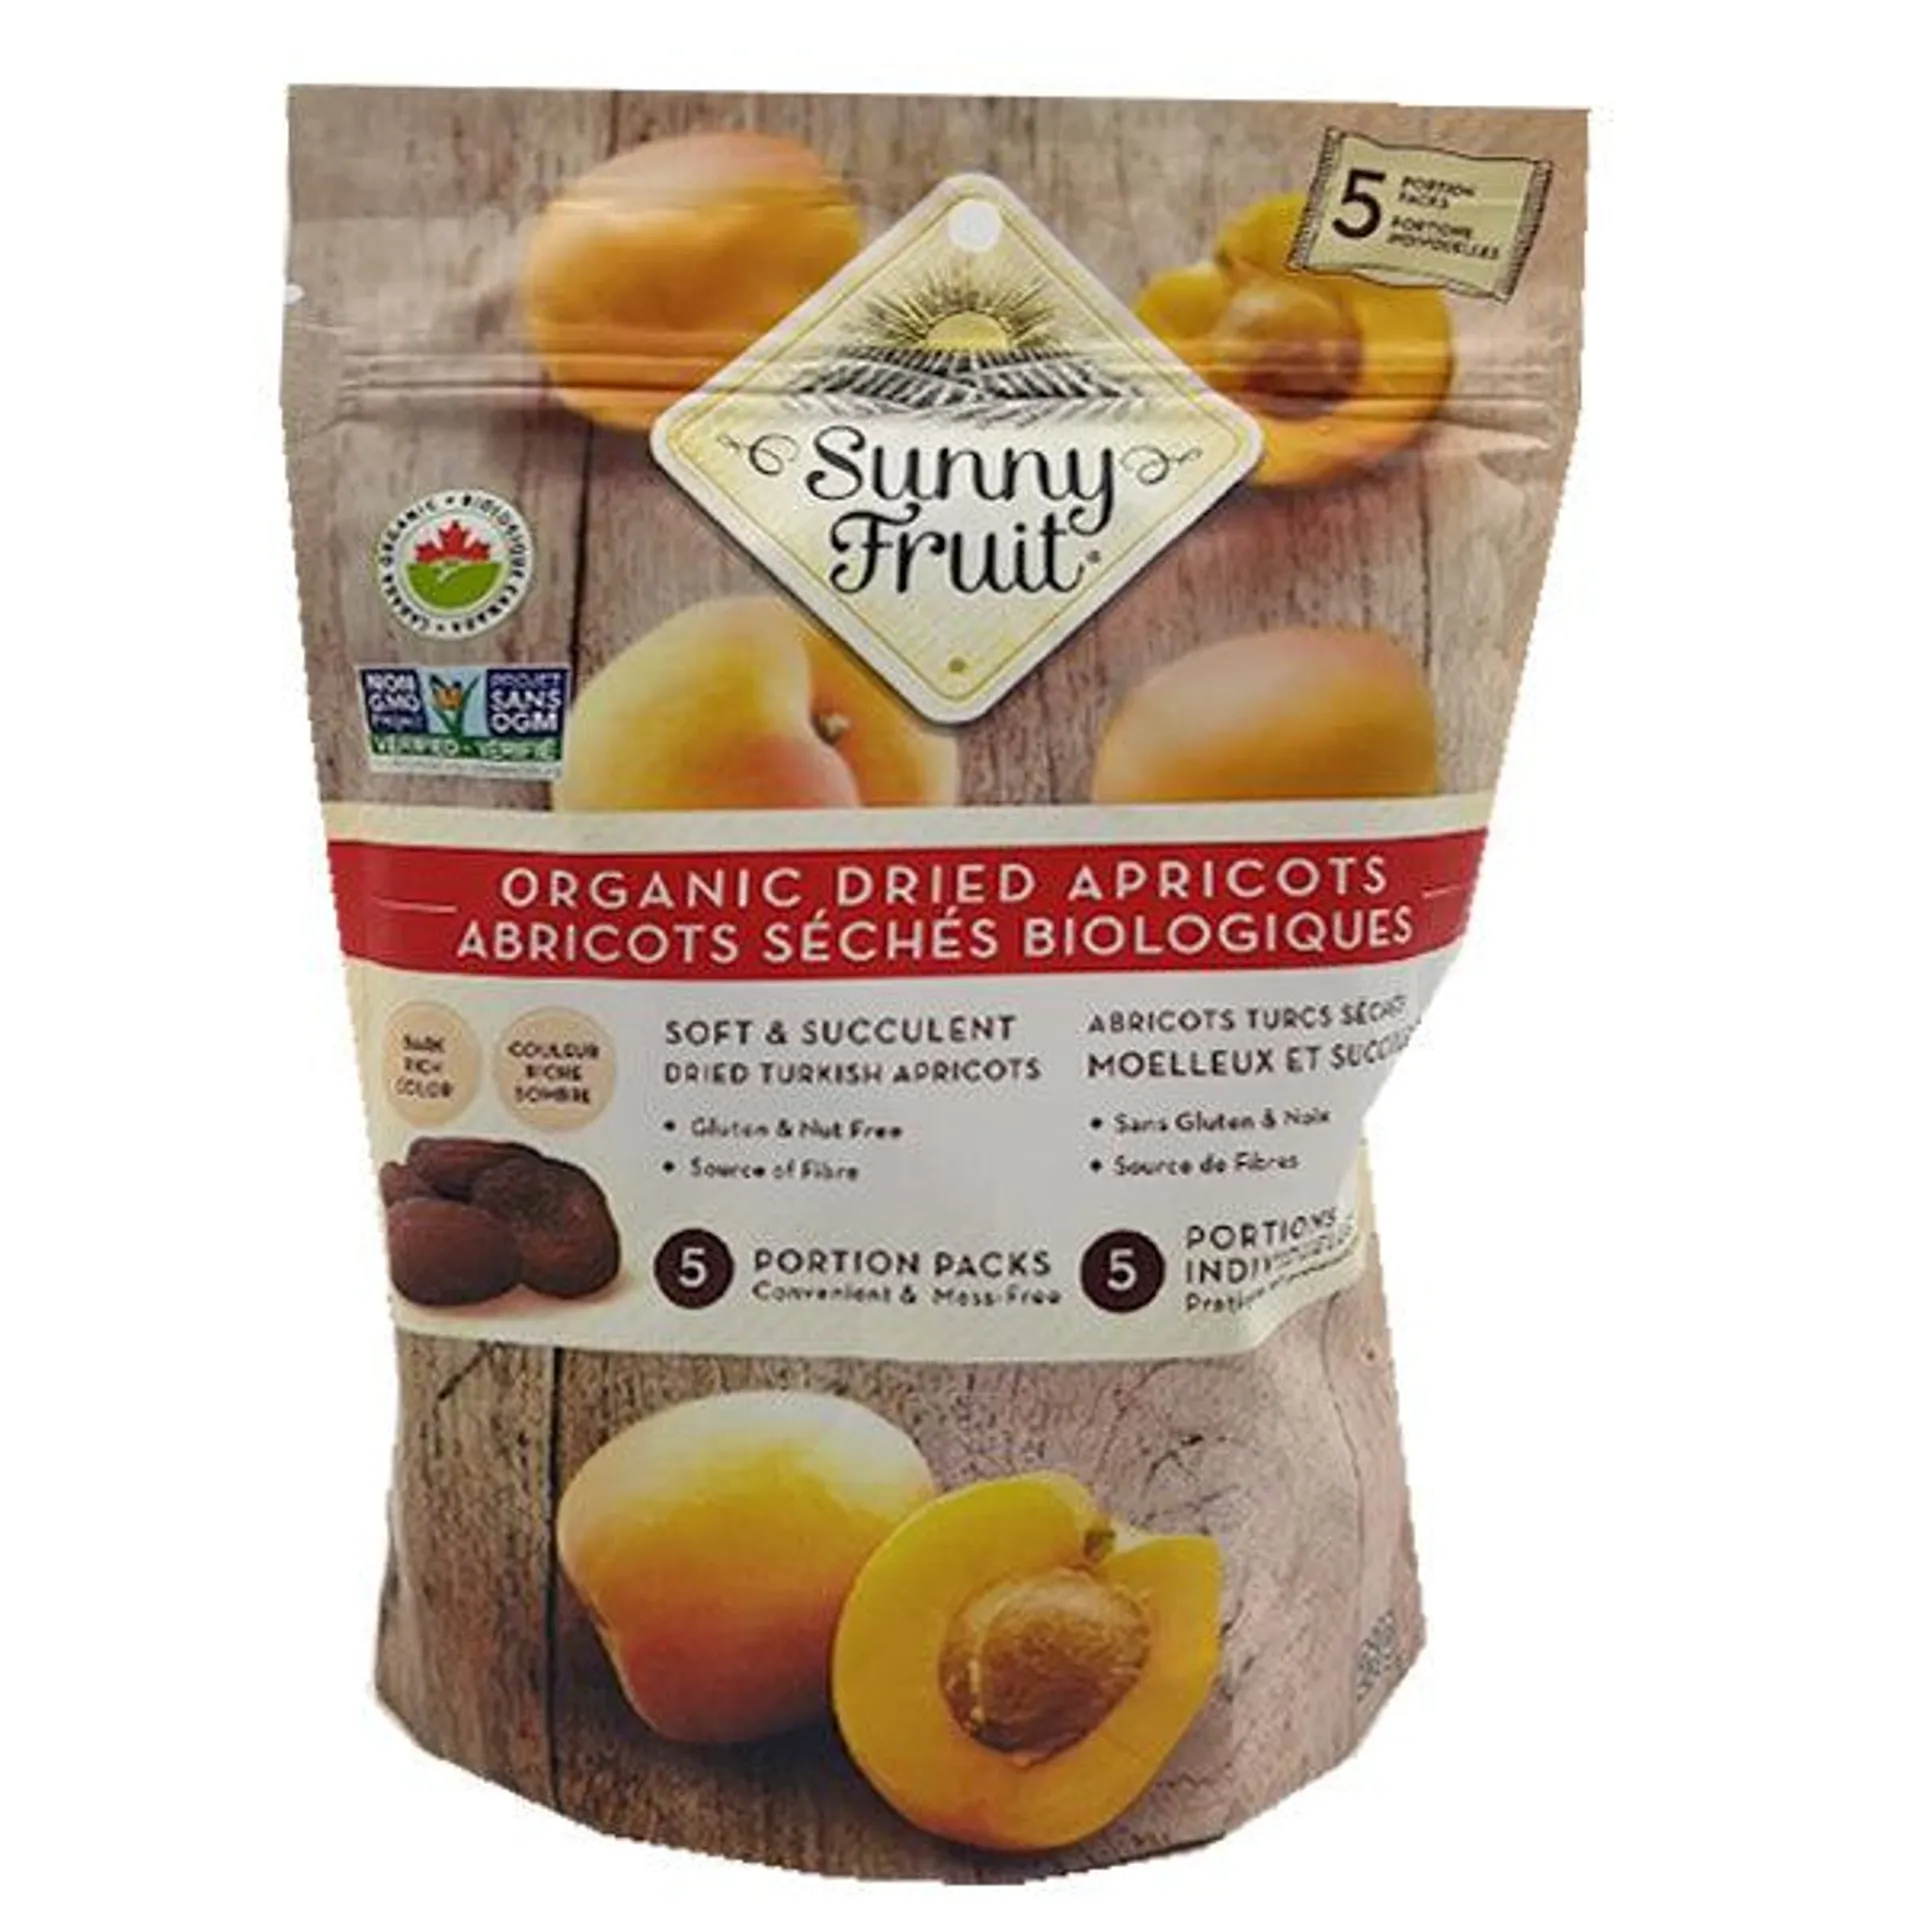 Sunny Fruit Organic Dried Arpicots 5 portion Packs 150g